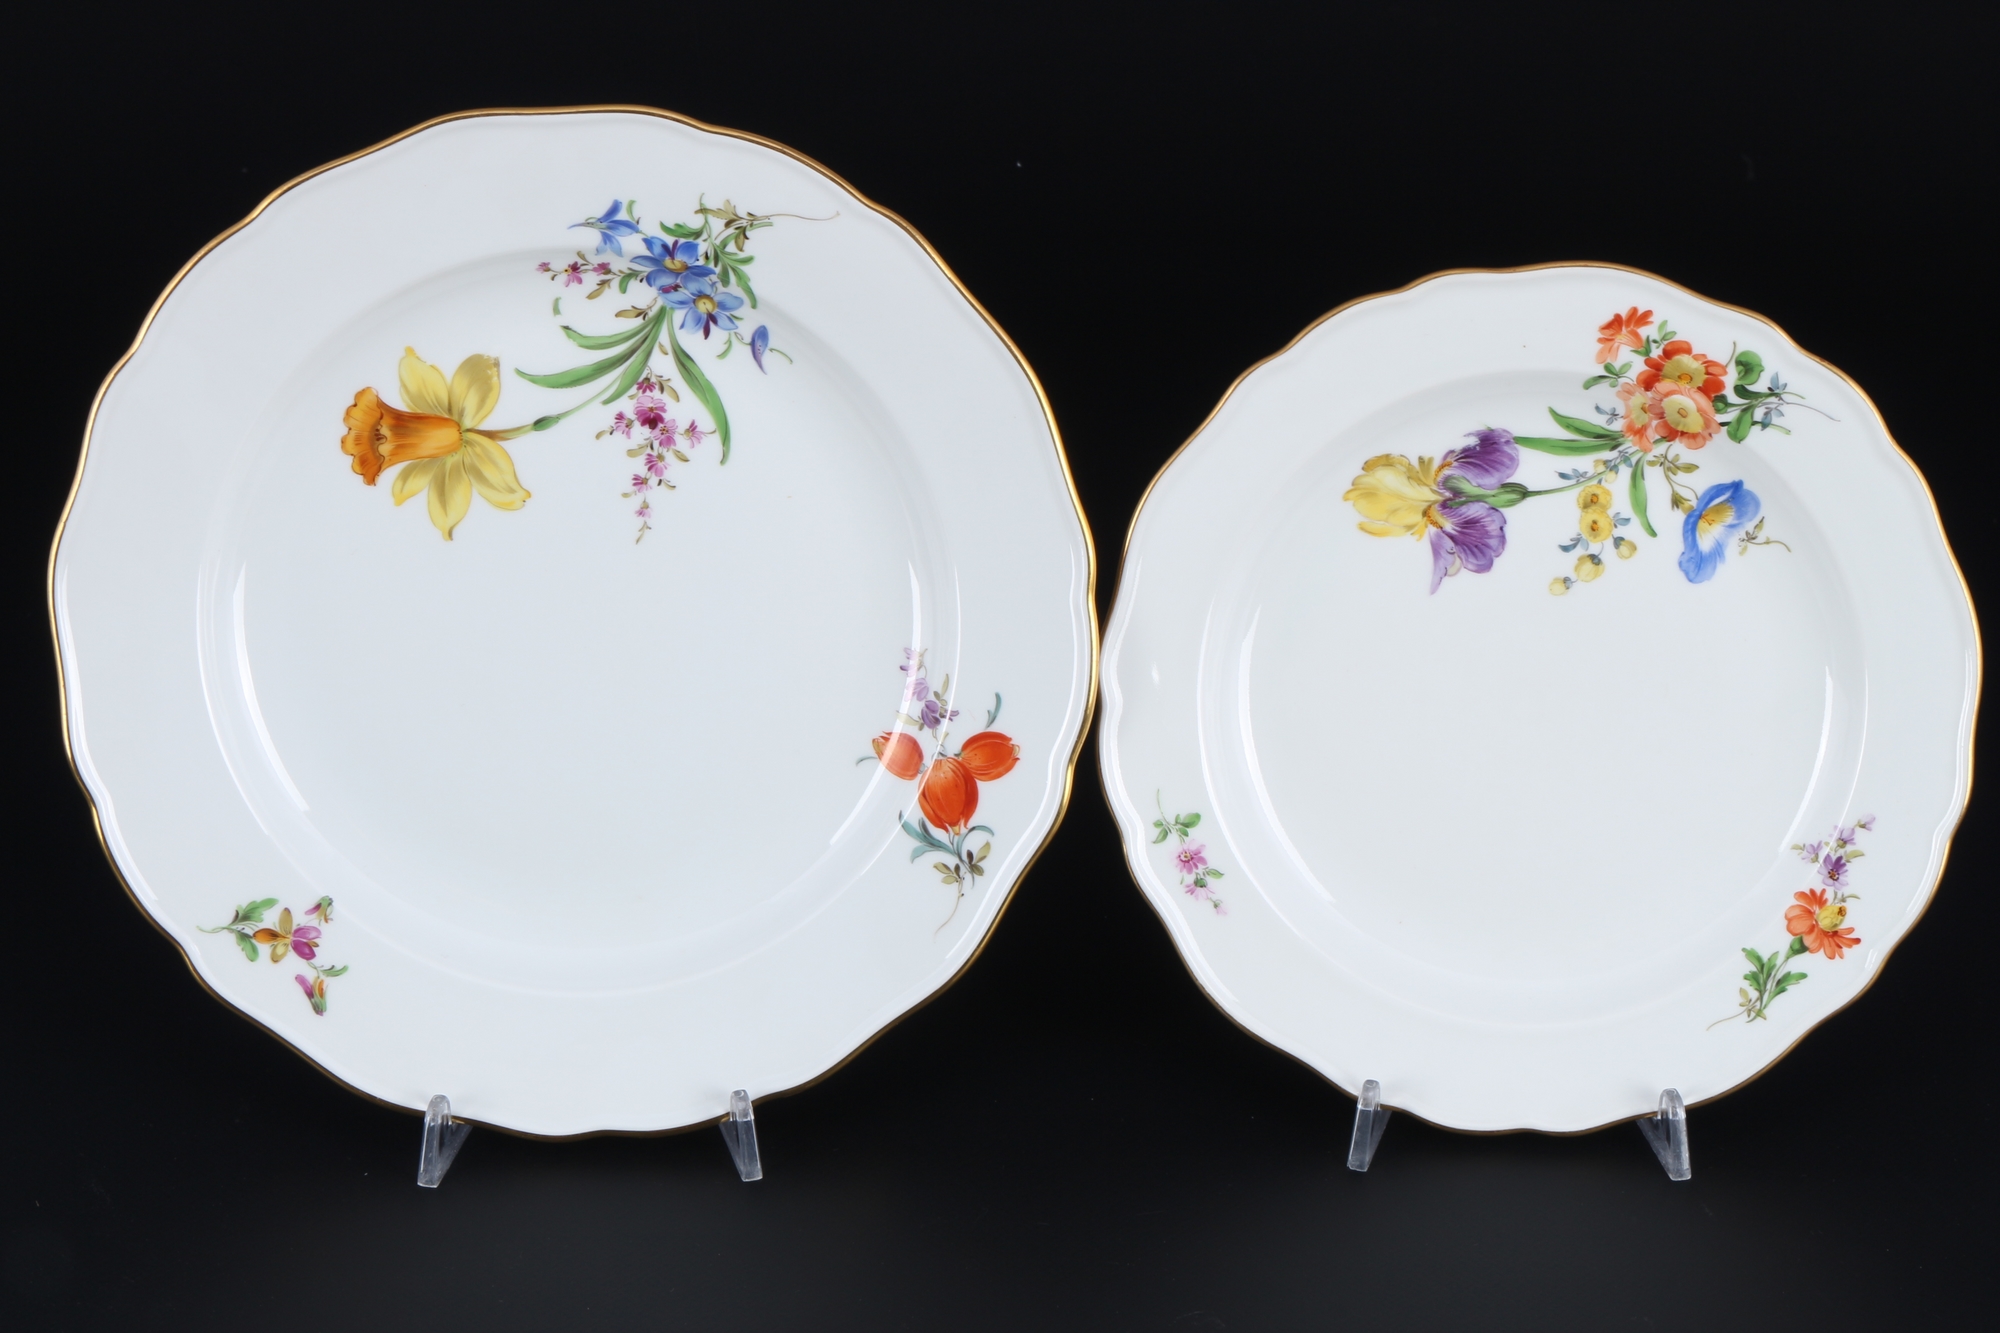 Meissen Blume 5 große Speiseteller und 5 mittlere Teller 1.Wahl, large and small dining plates, - Image 4 of 7